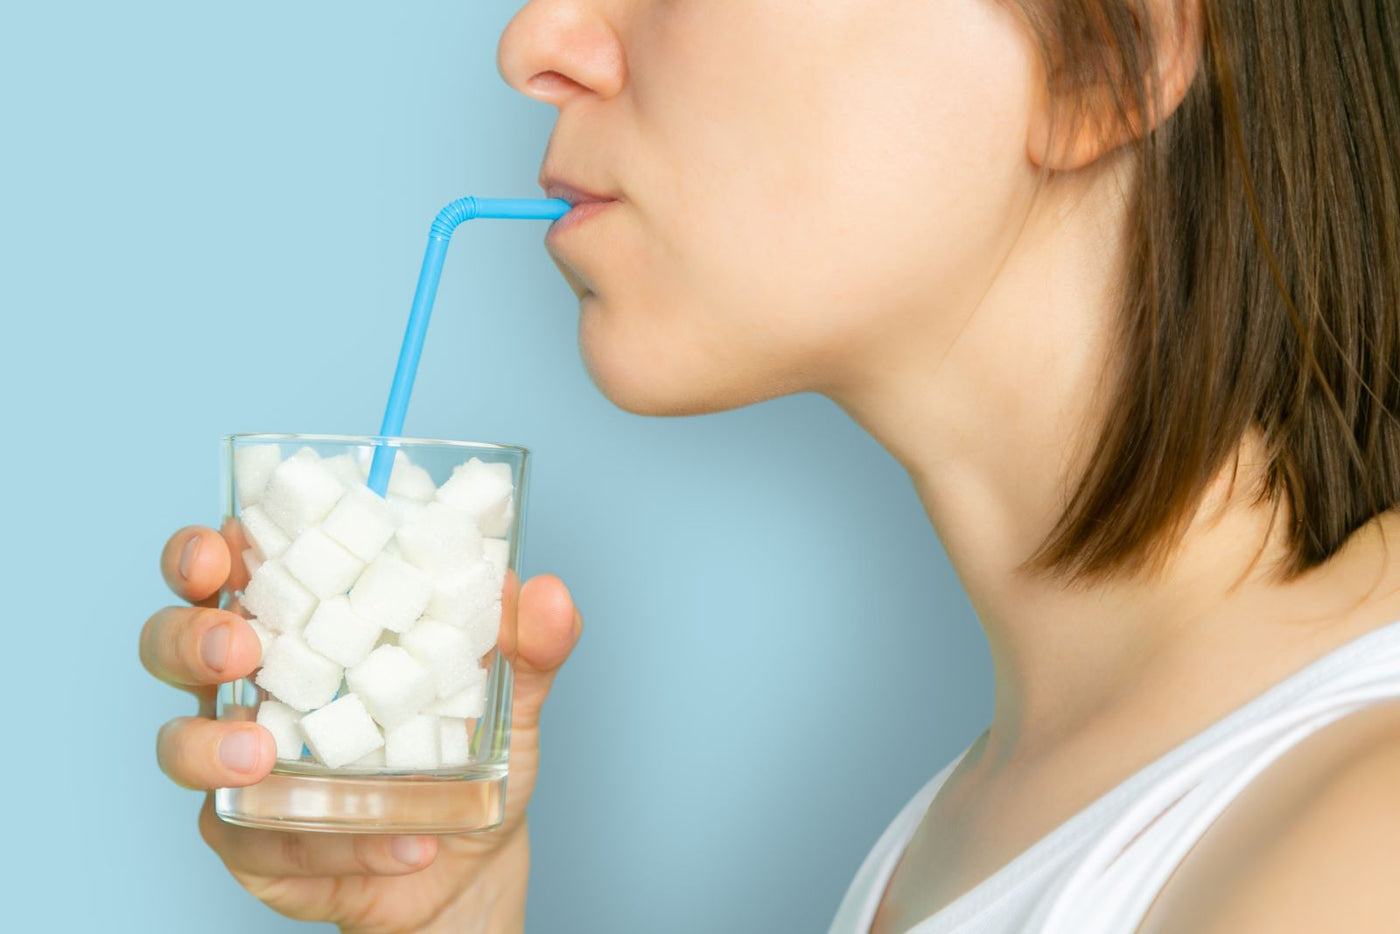 What Makes Sugar Addictive?